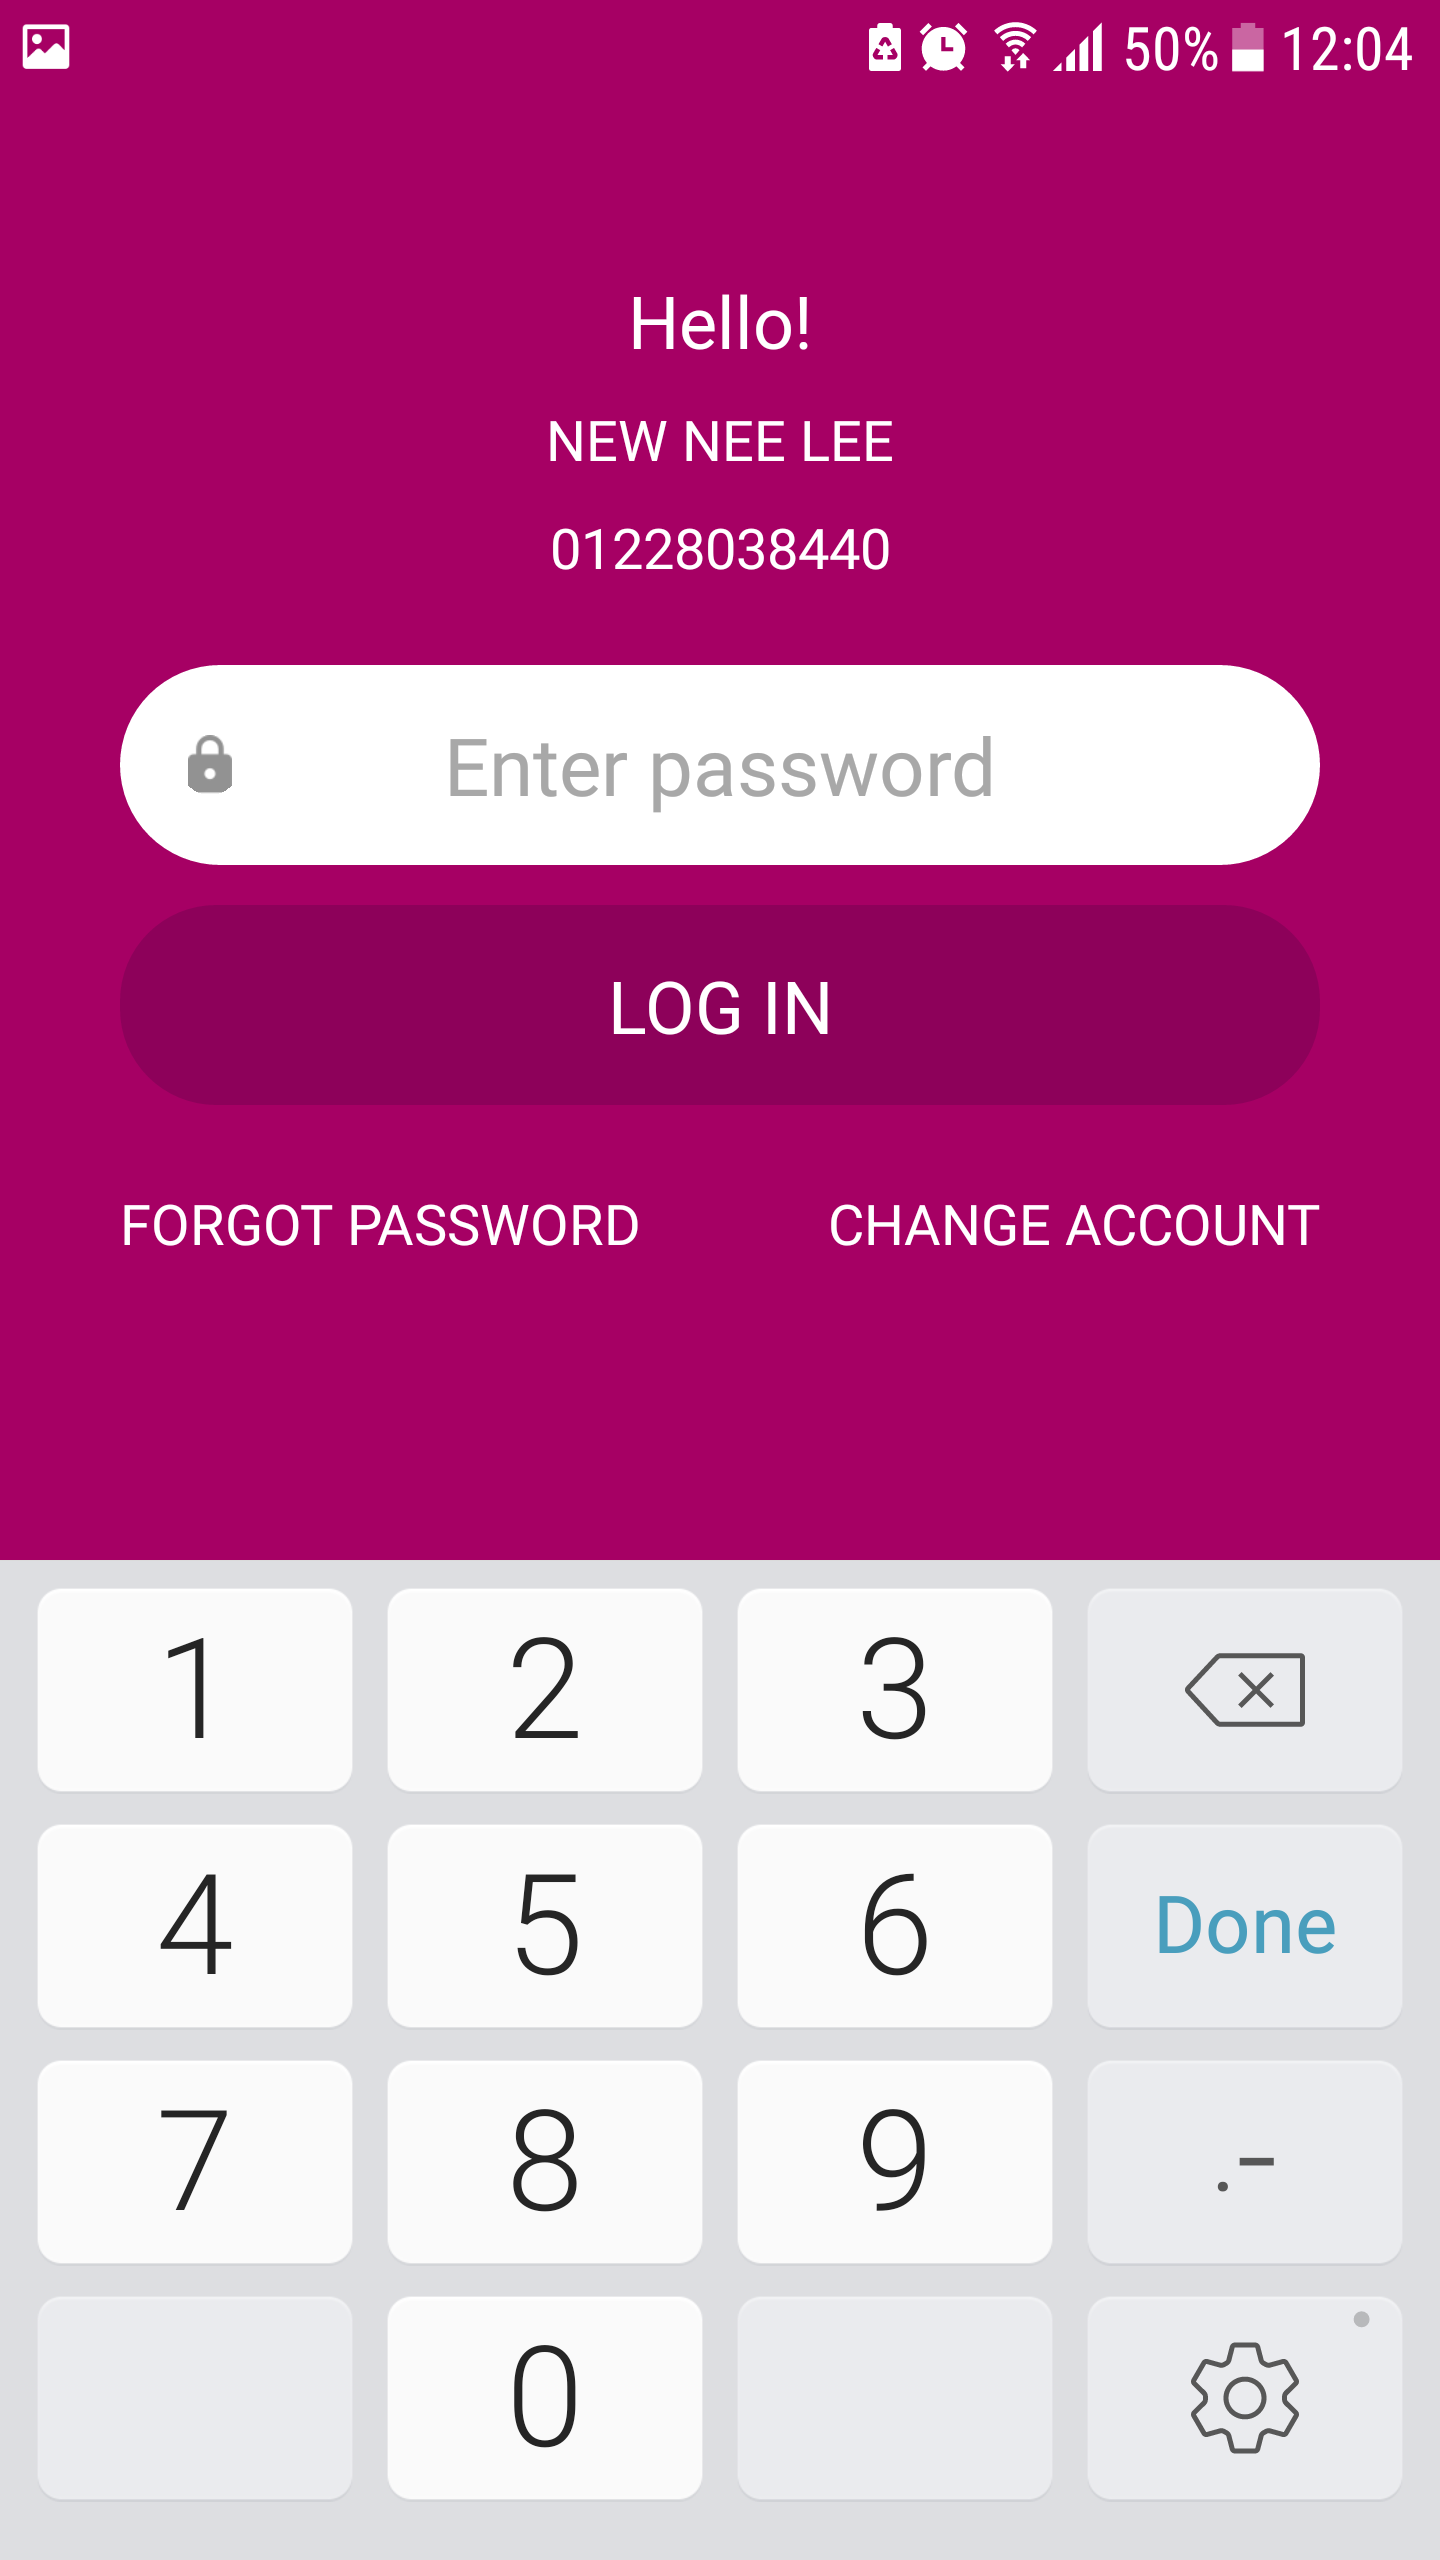 1 Account password